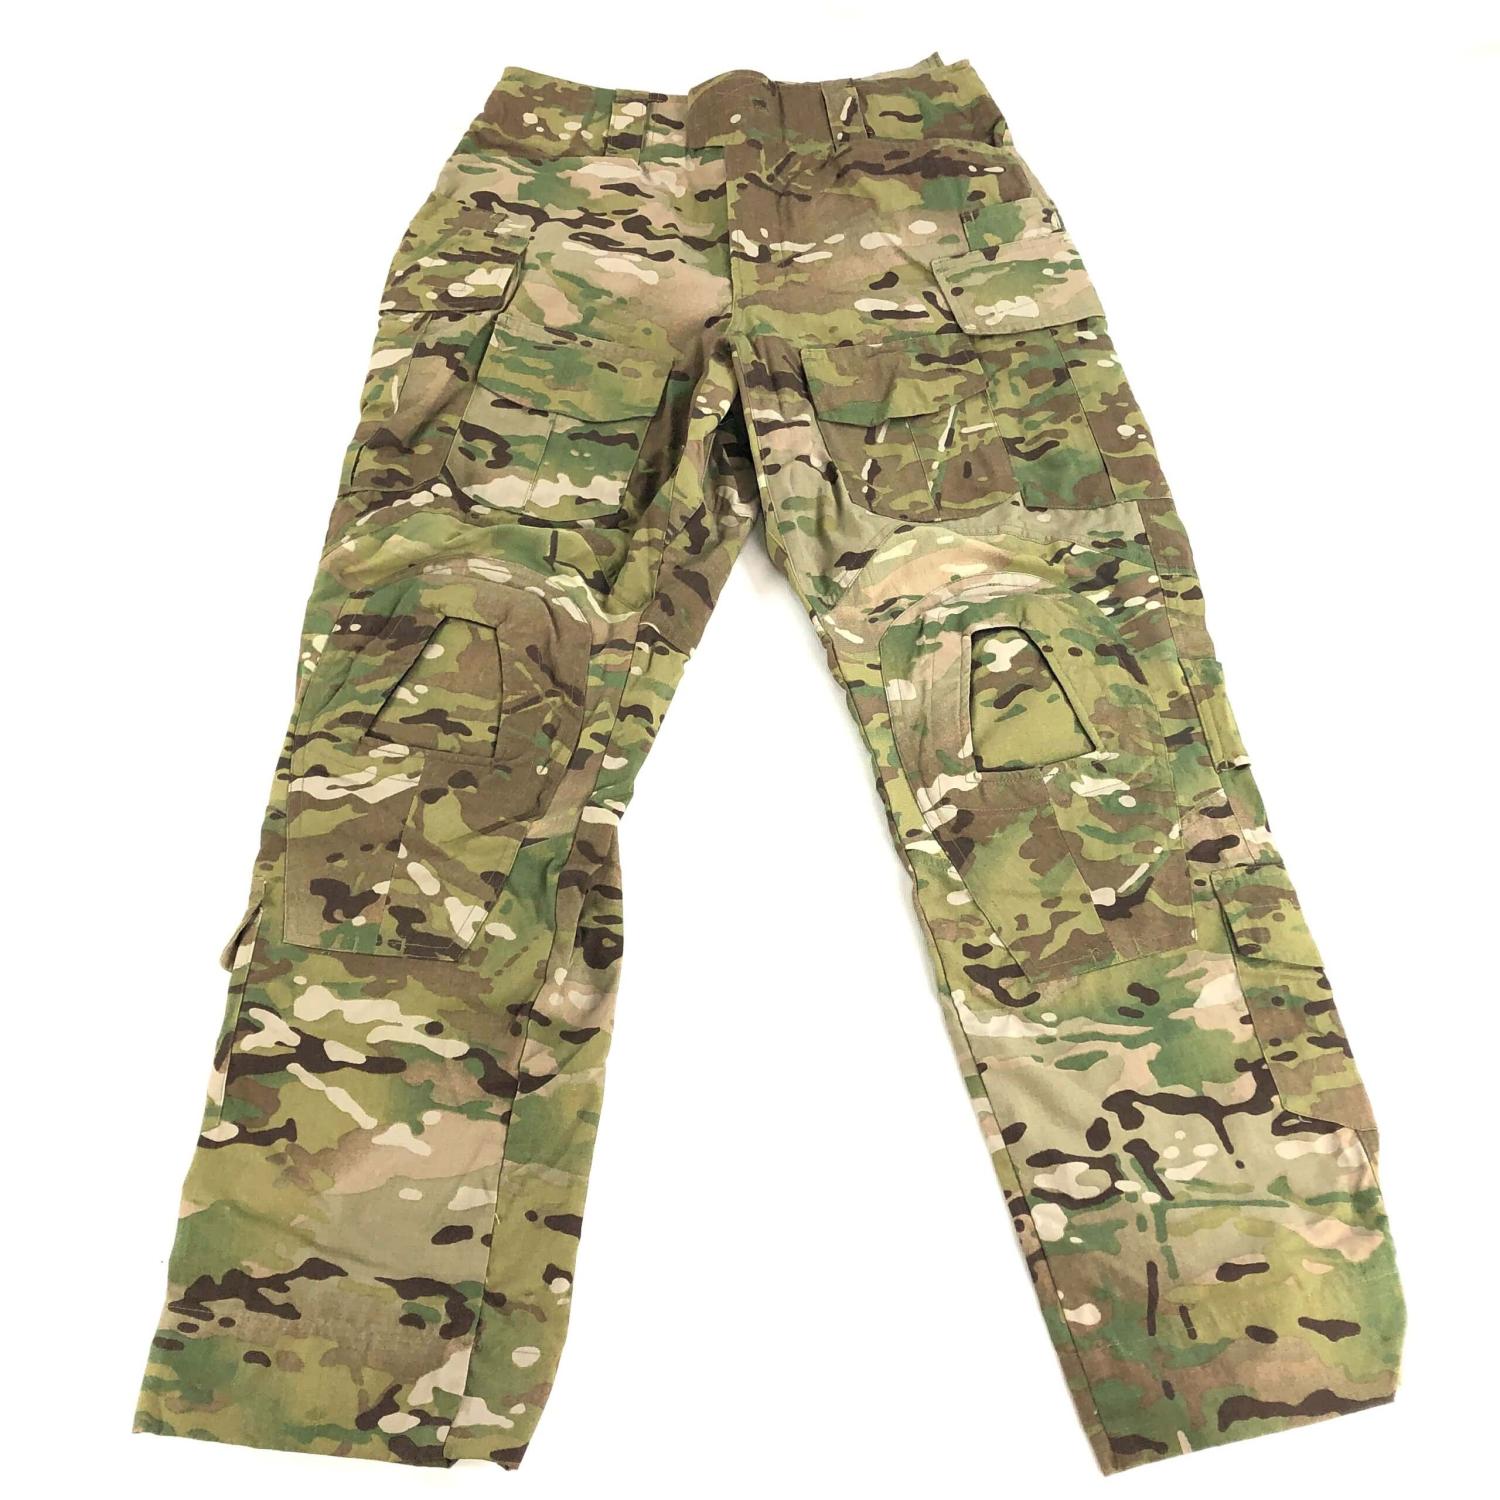 Тактические брюки Crye Precision G3 FR Combat Pants (Drifire) Multicam, размер 34/R - фото 1